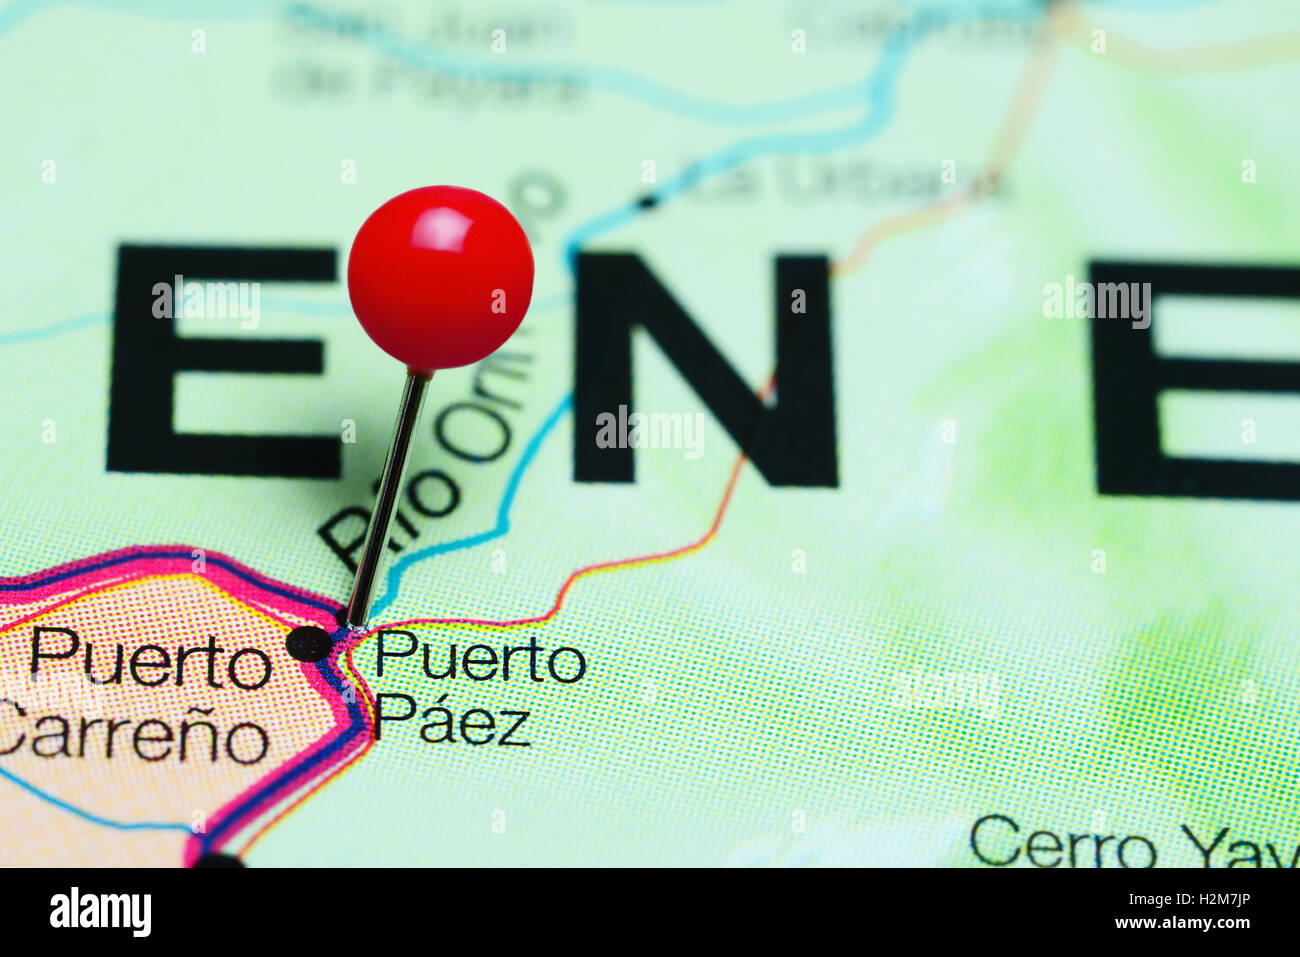 Puerto Paez pinned on a map of Venezuela Stock Photo